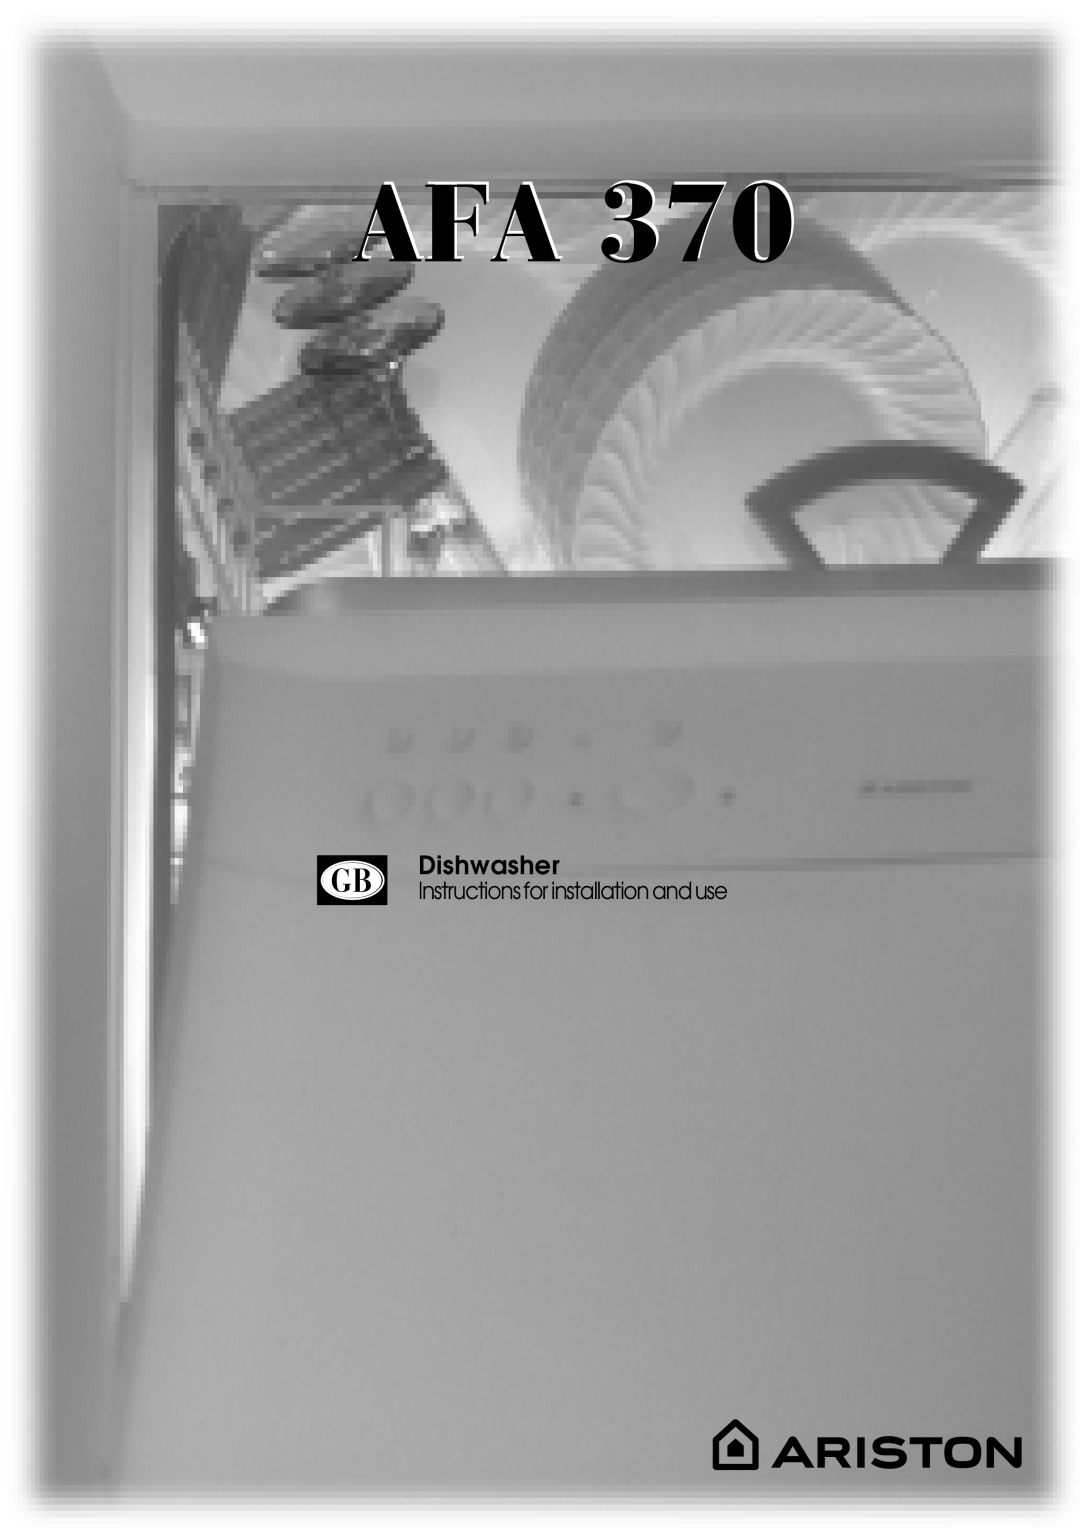 Ariston AFA 370 manual Dishwasher, Instructionsforinstallationanduse 